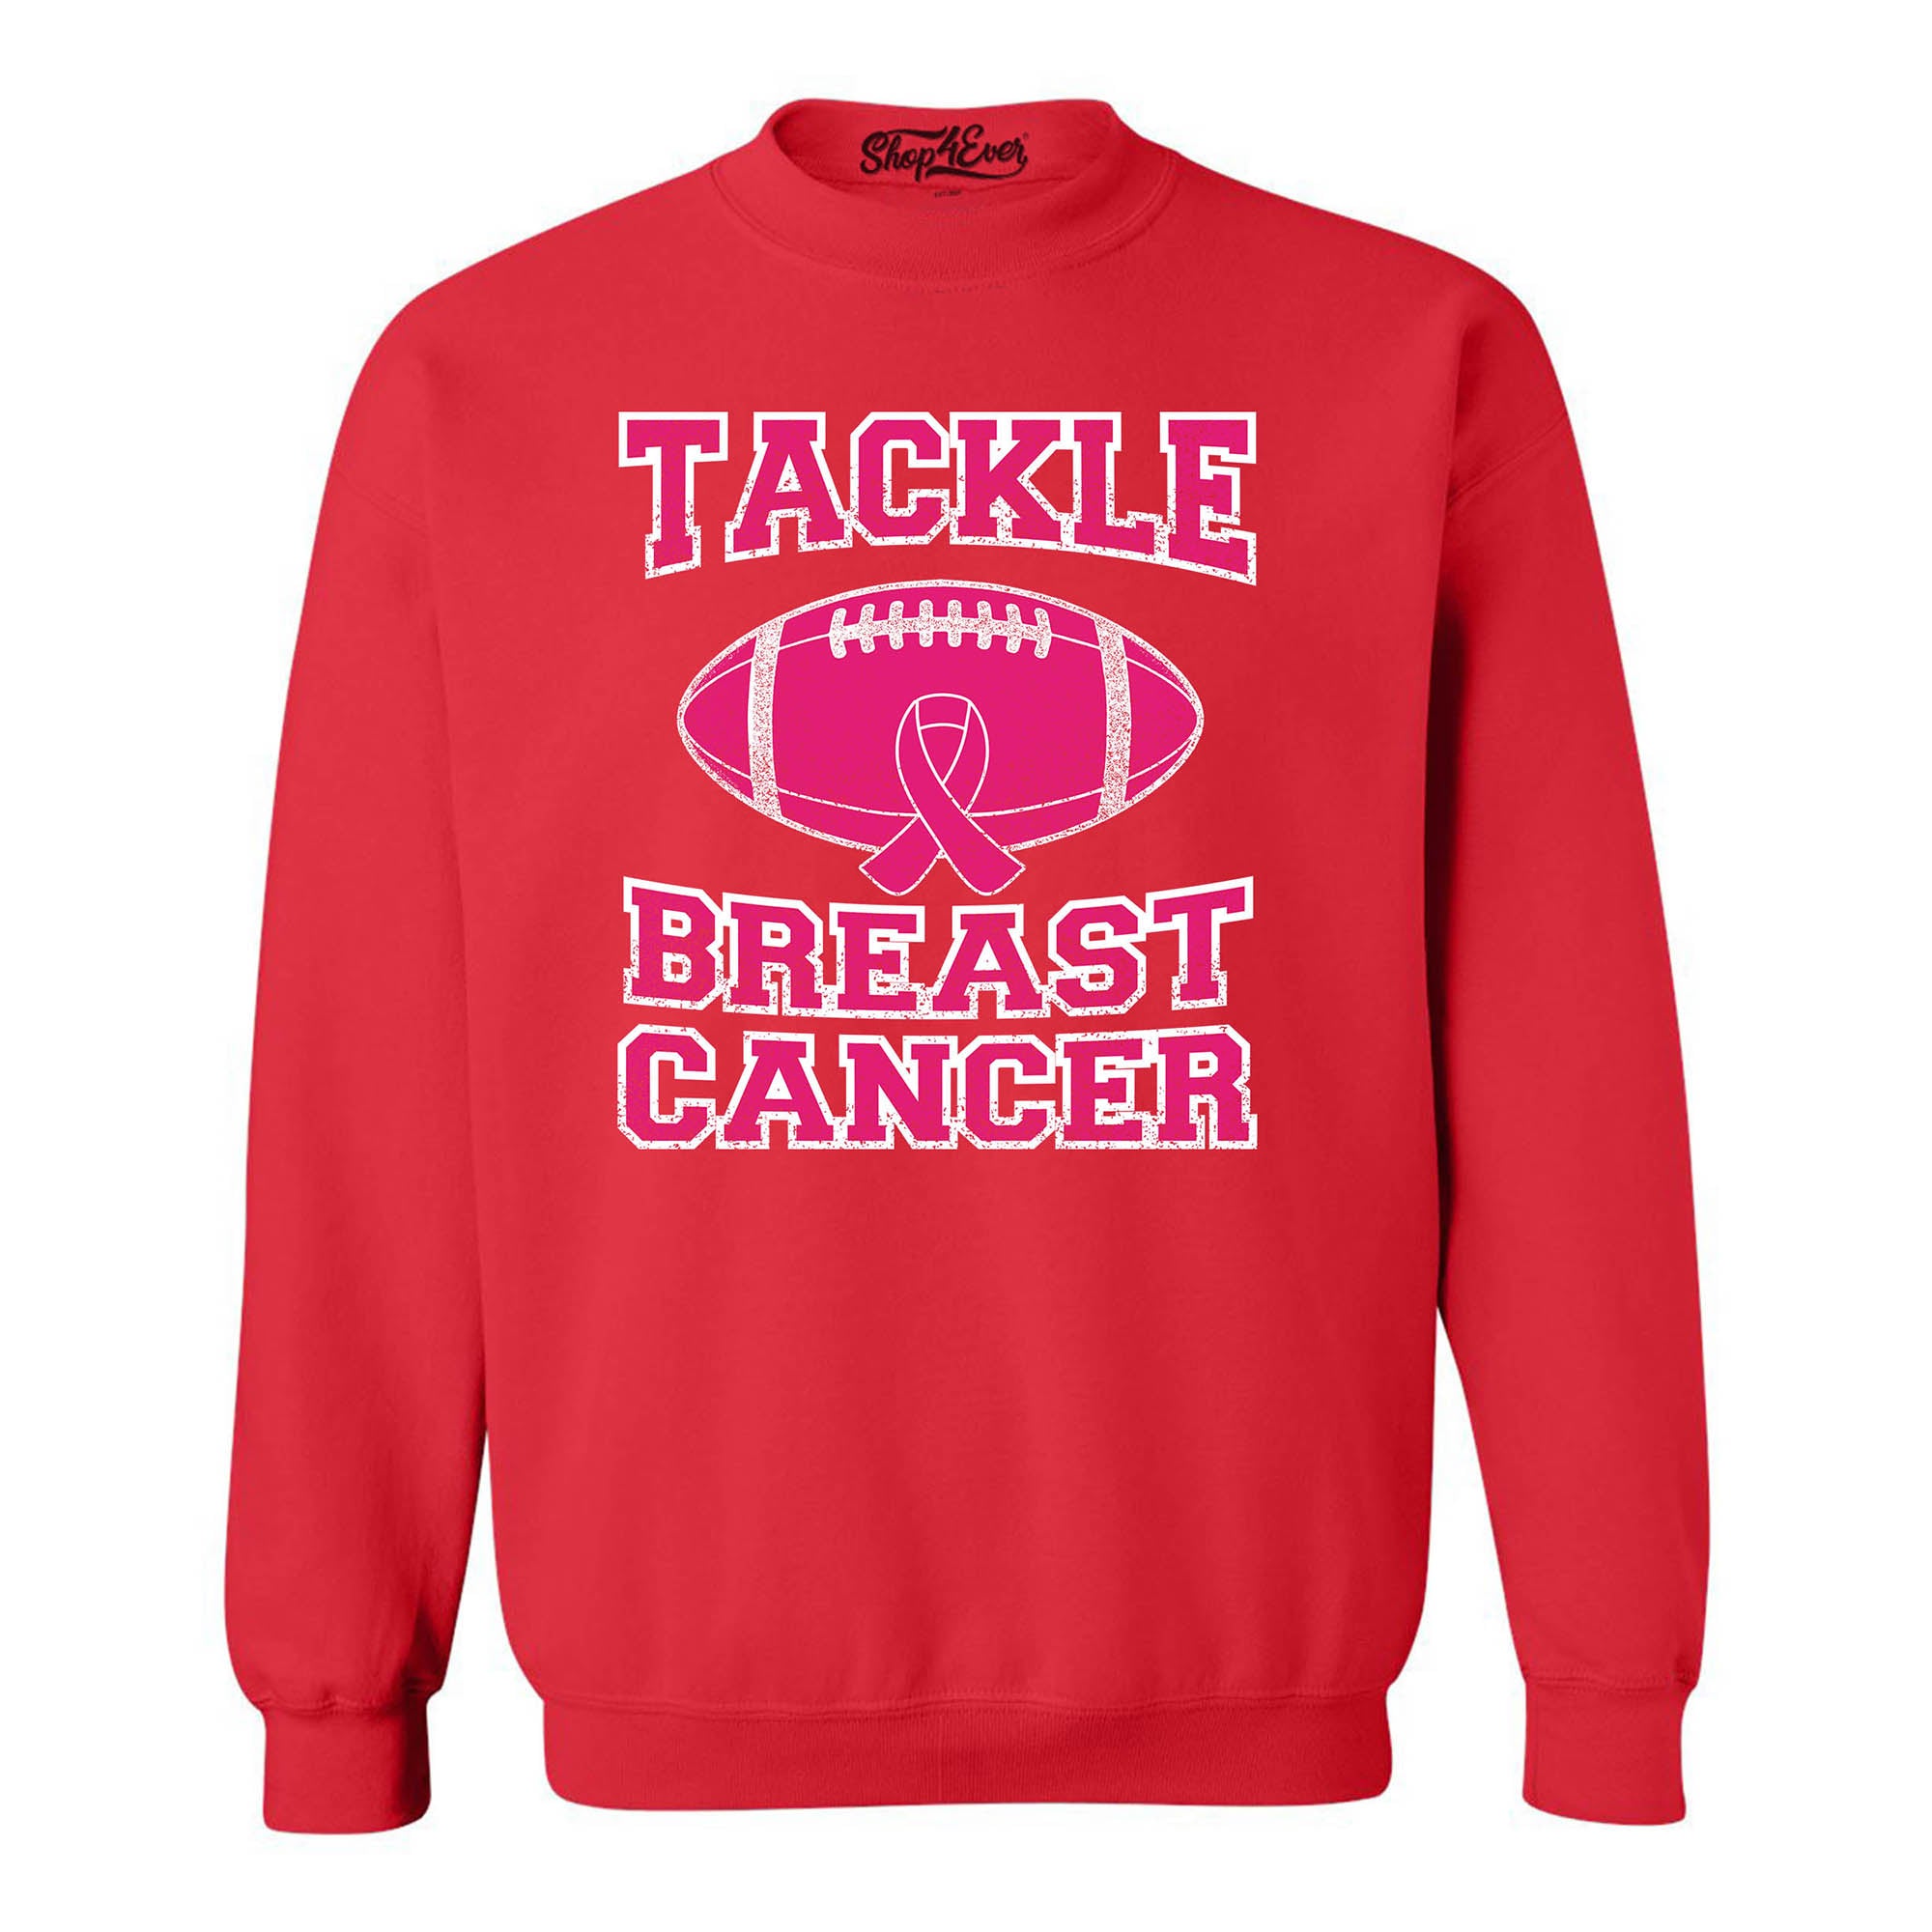 Tackle Breast Cancer Crewnecks Breast Cancer Awareness Sweatshirts